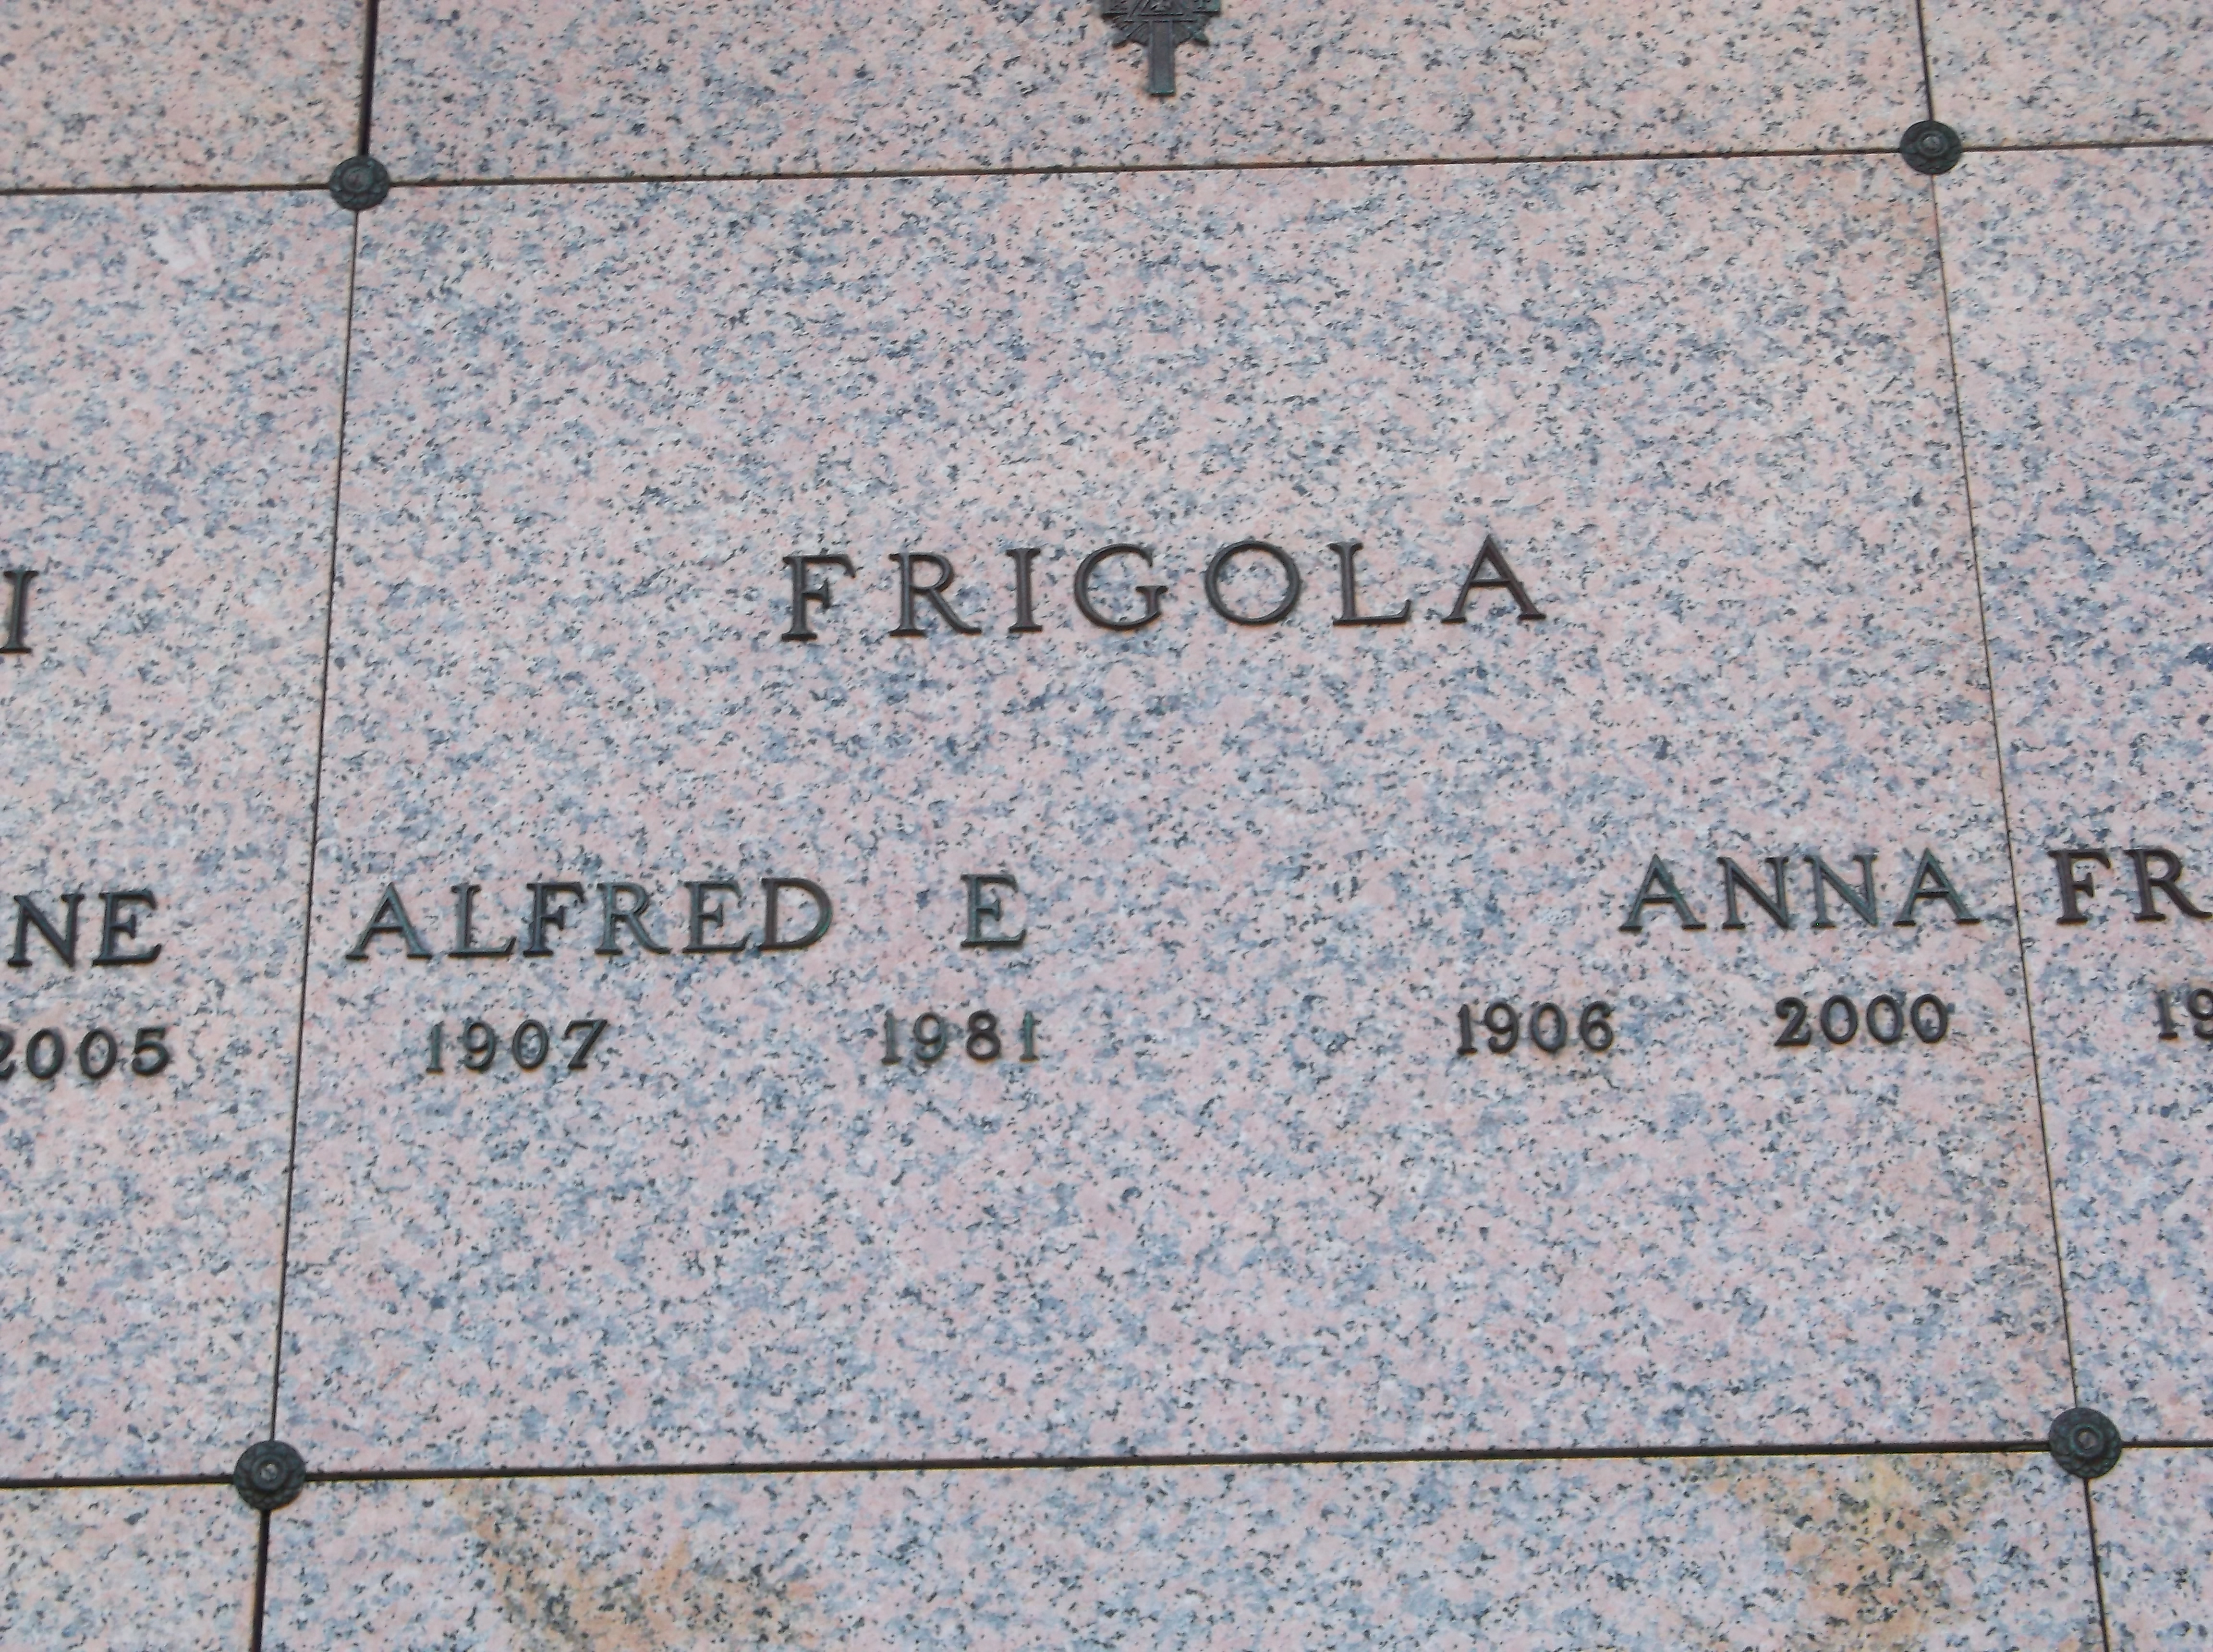 Anna Frigola